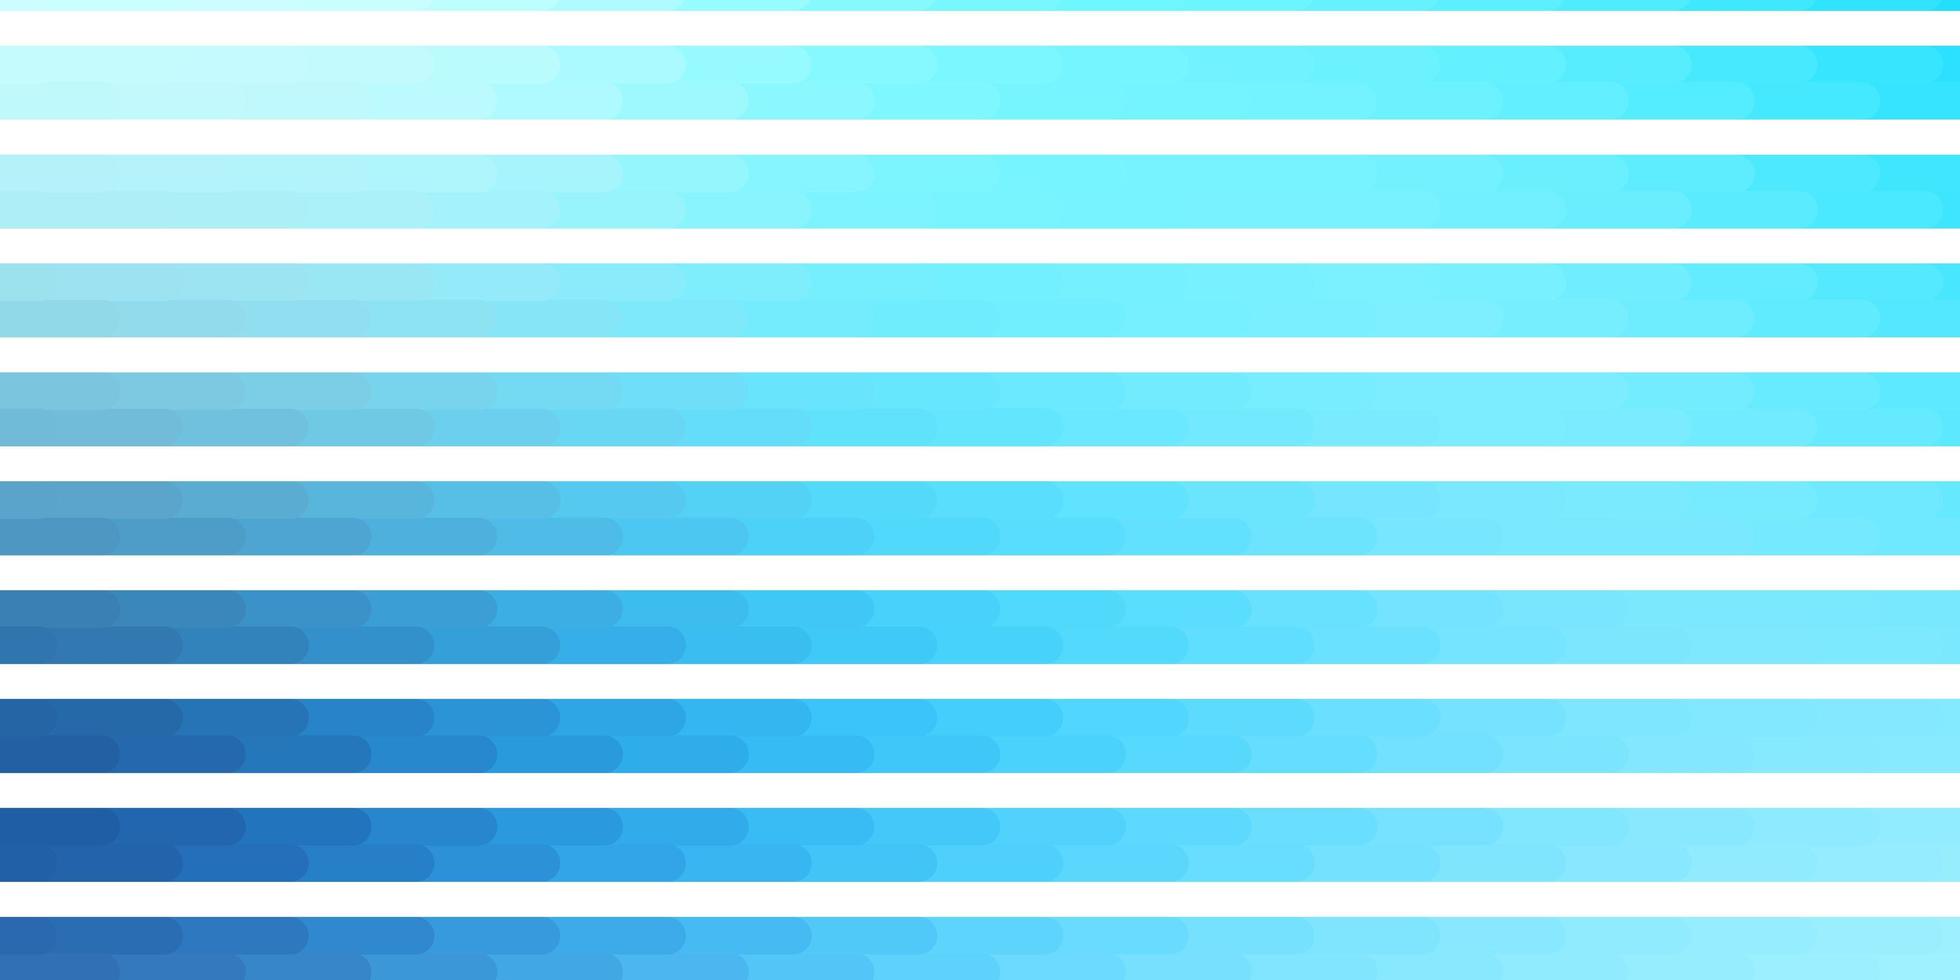 Telón de fondo de vector azul claro con líneas. Ilustración de degradado colorido con líneas planas abstractas. mejor diseño para sus carteles, pancartas.